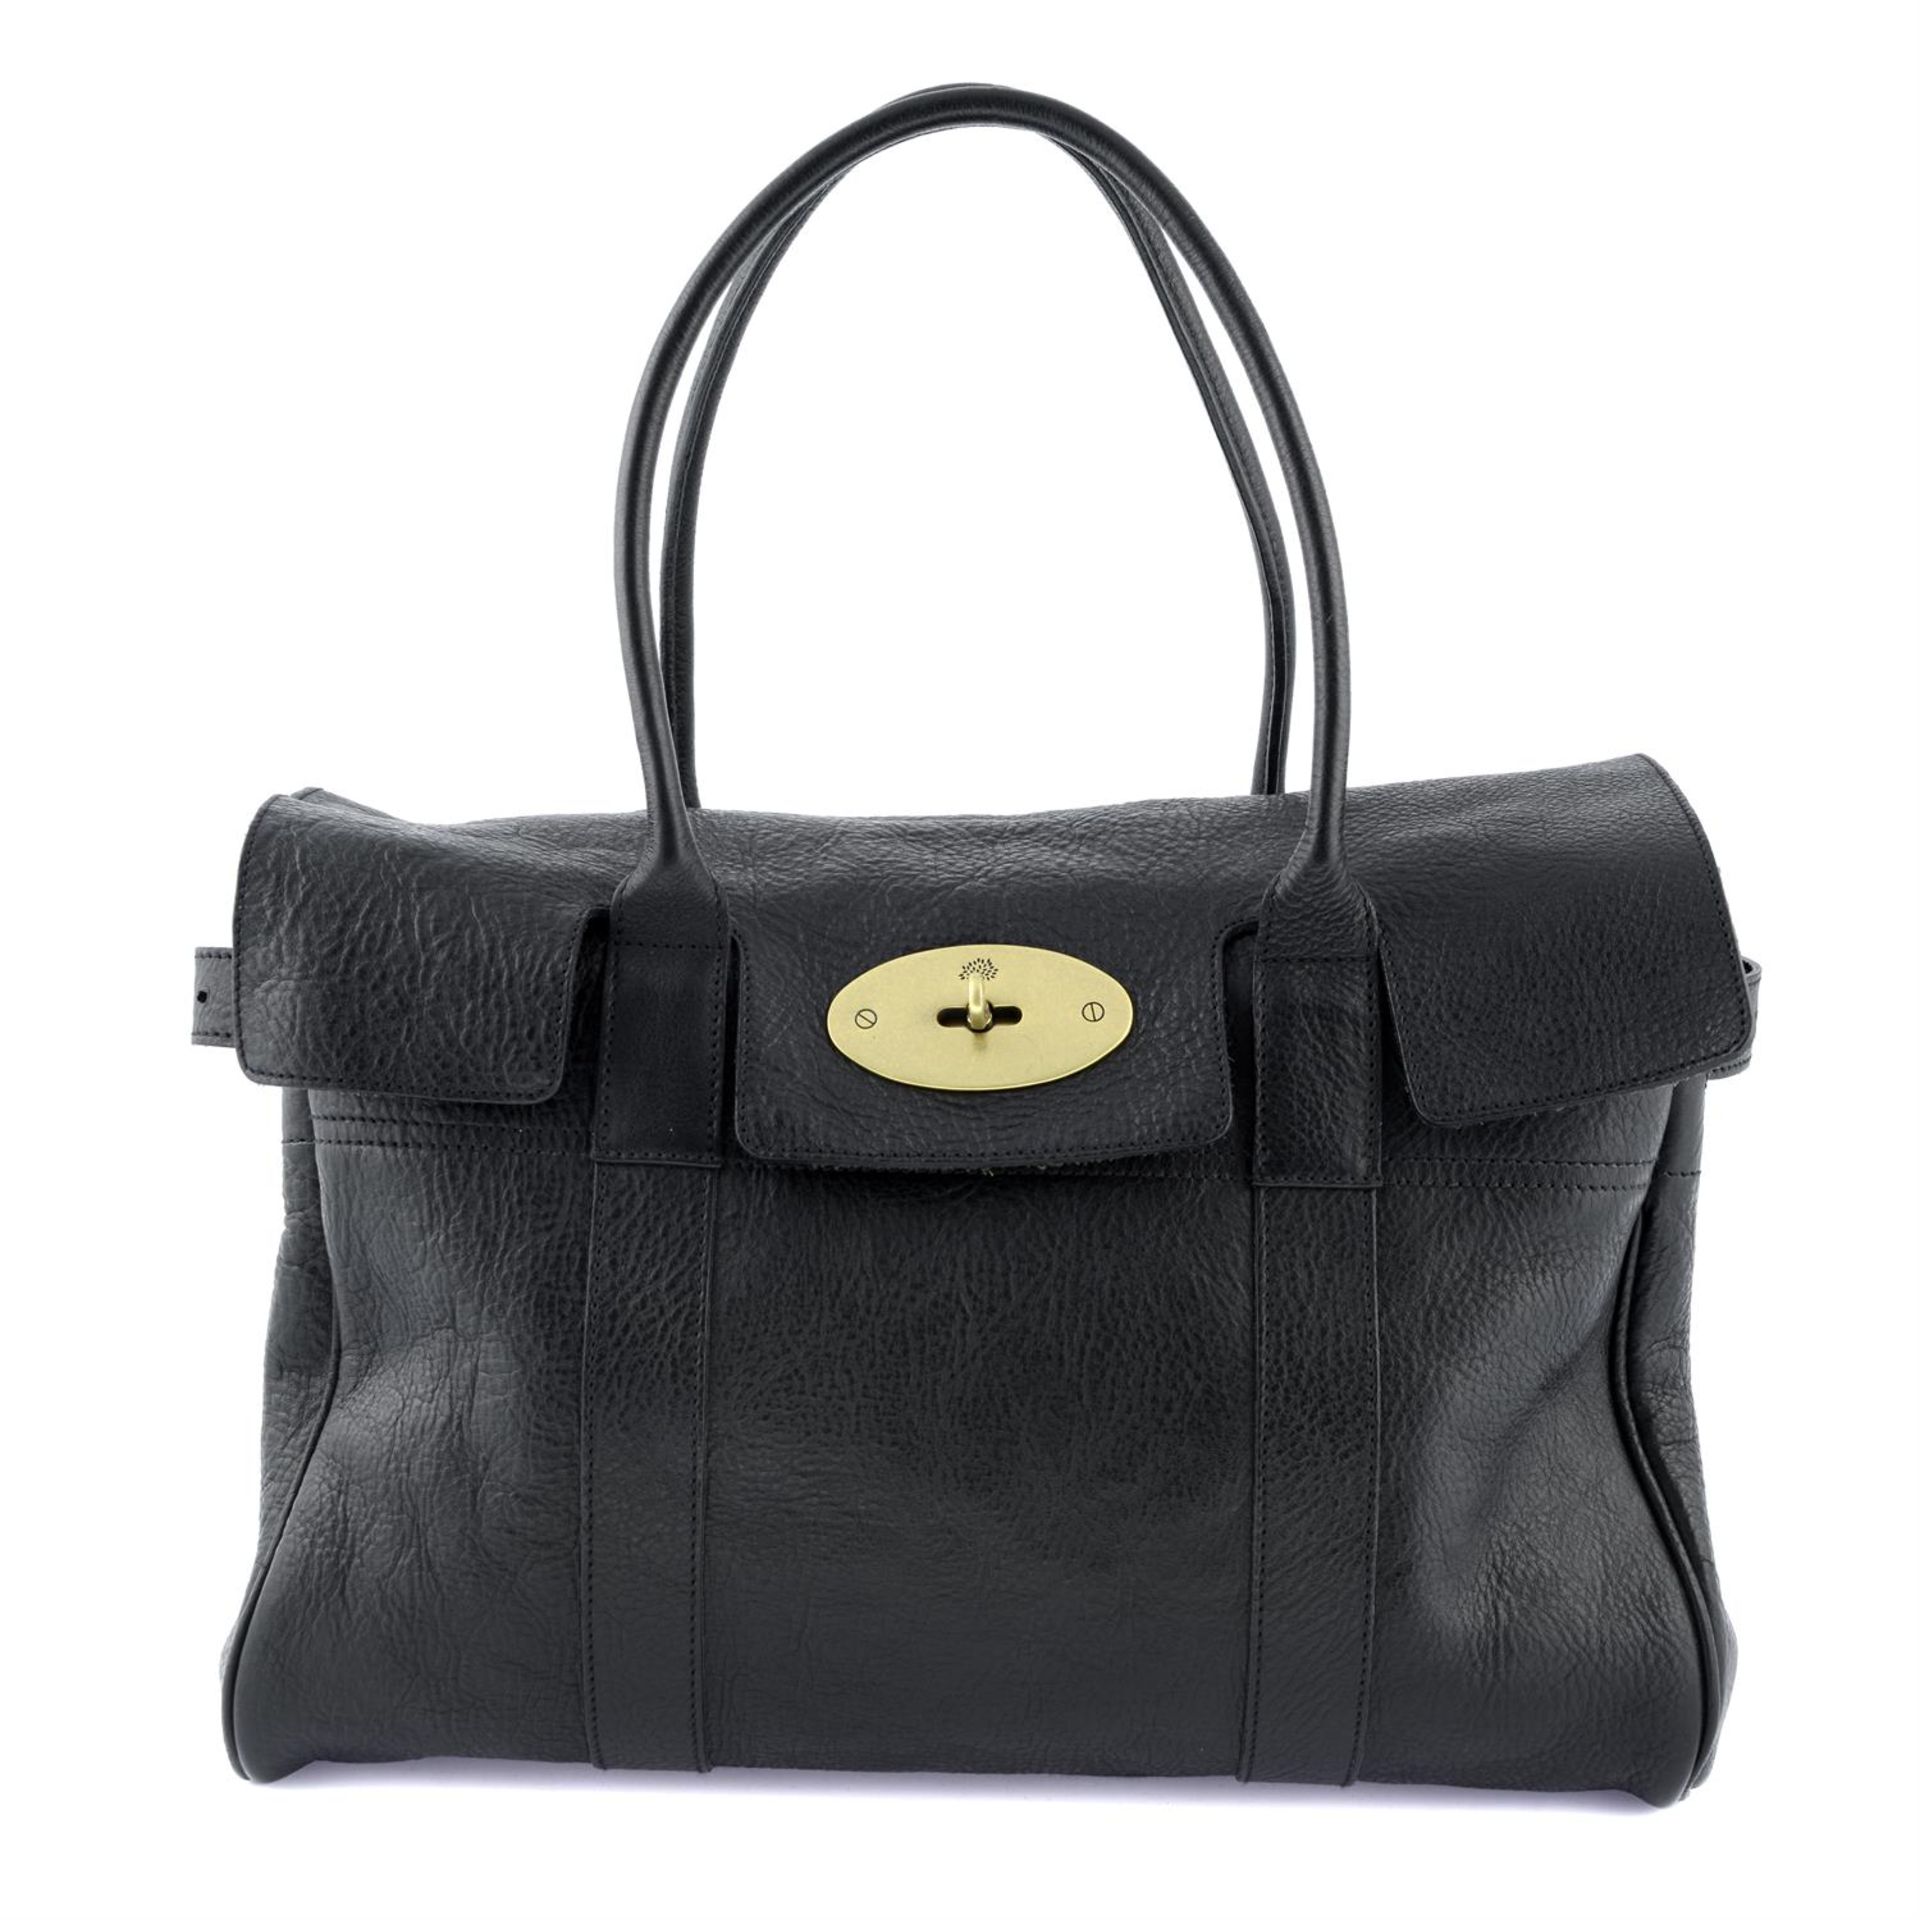 MULBERRY - a black leather Bayswater handbag.